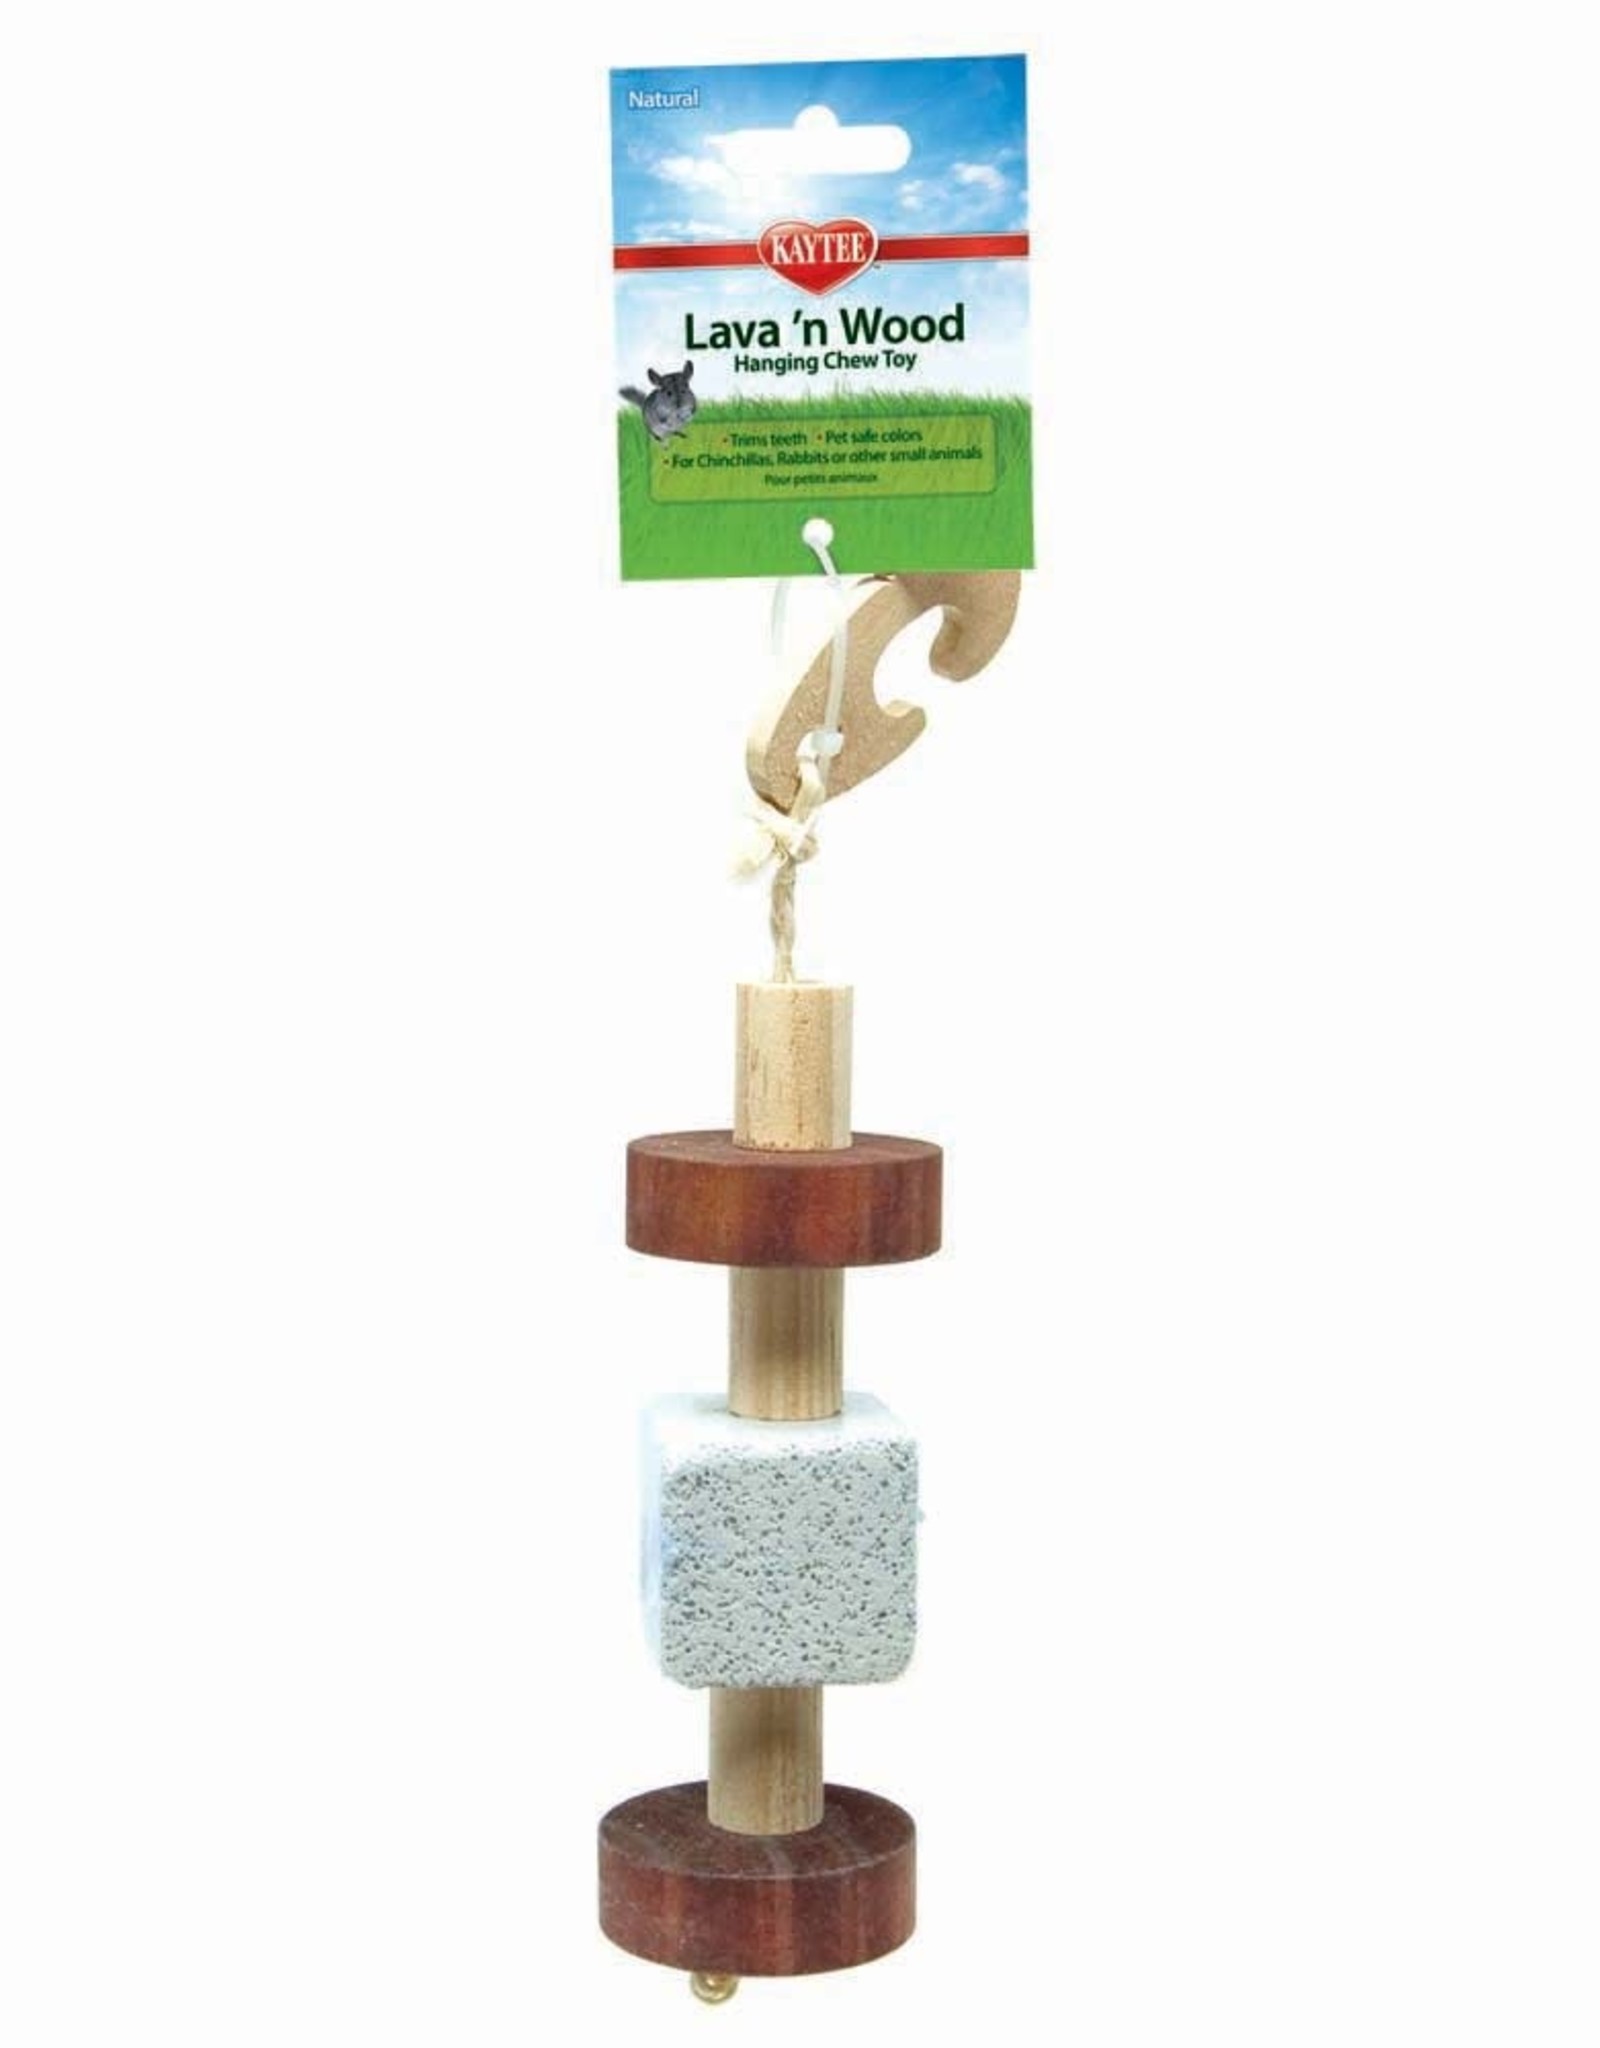 KAYTEE PRODUCTS Kaytee Natural Lava N wood Hanging Chew Toy